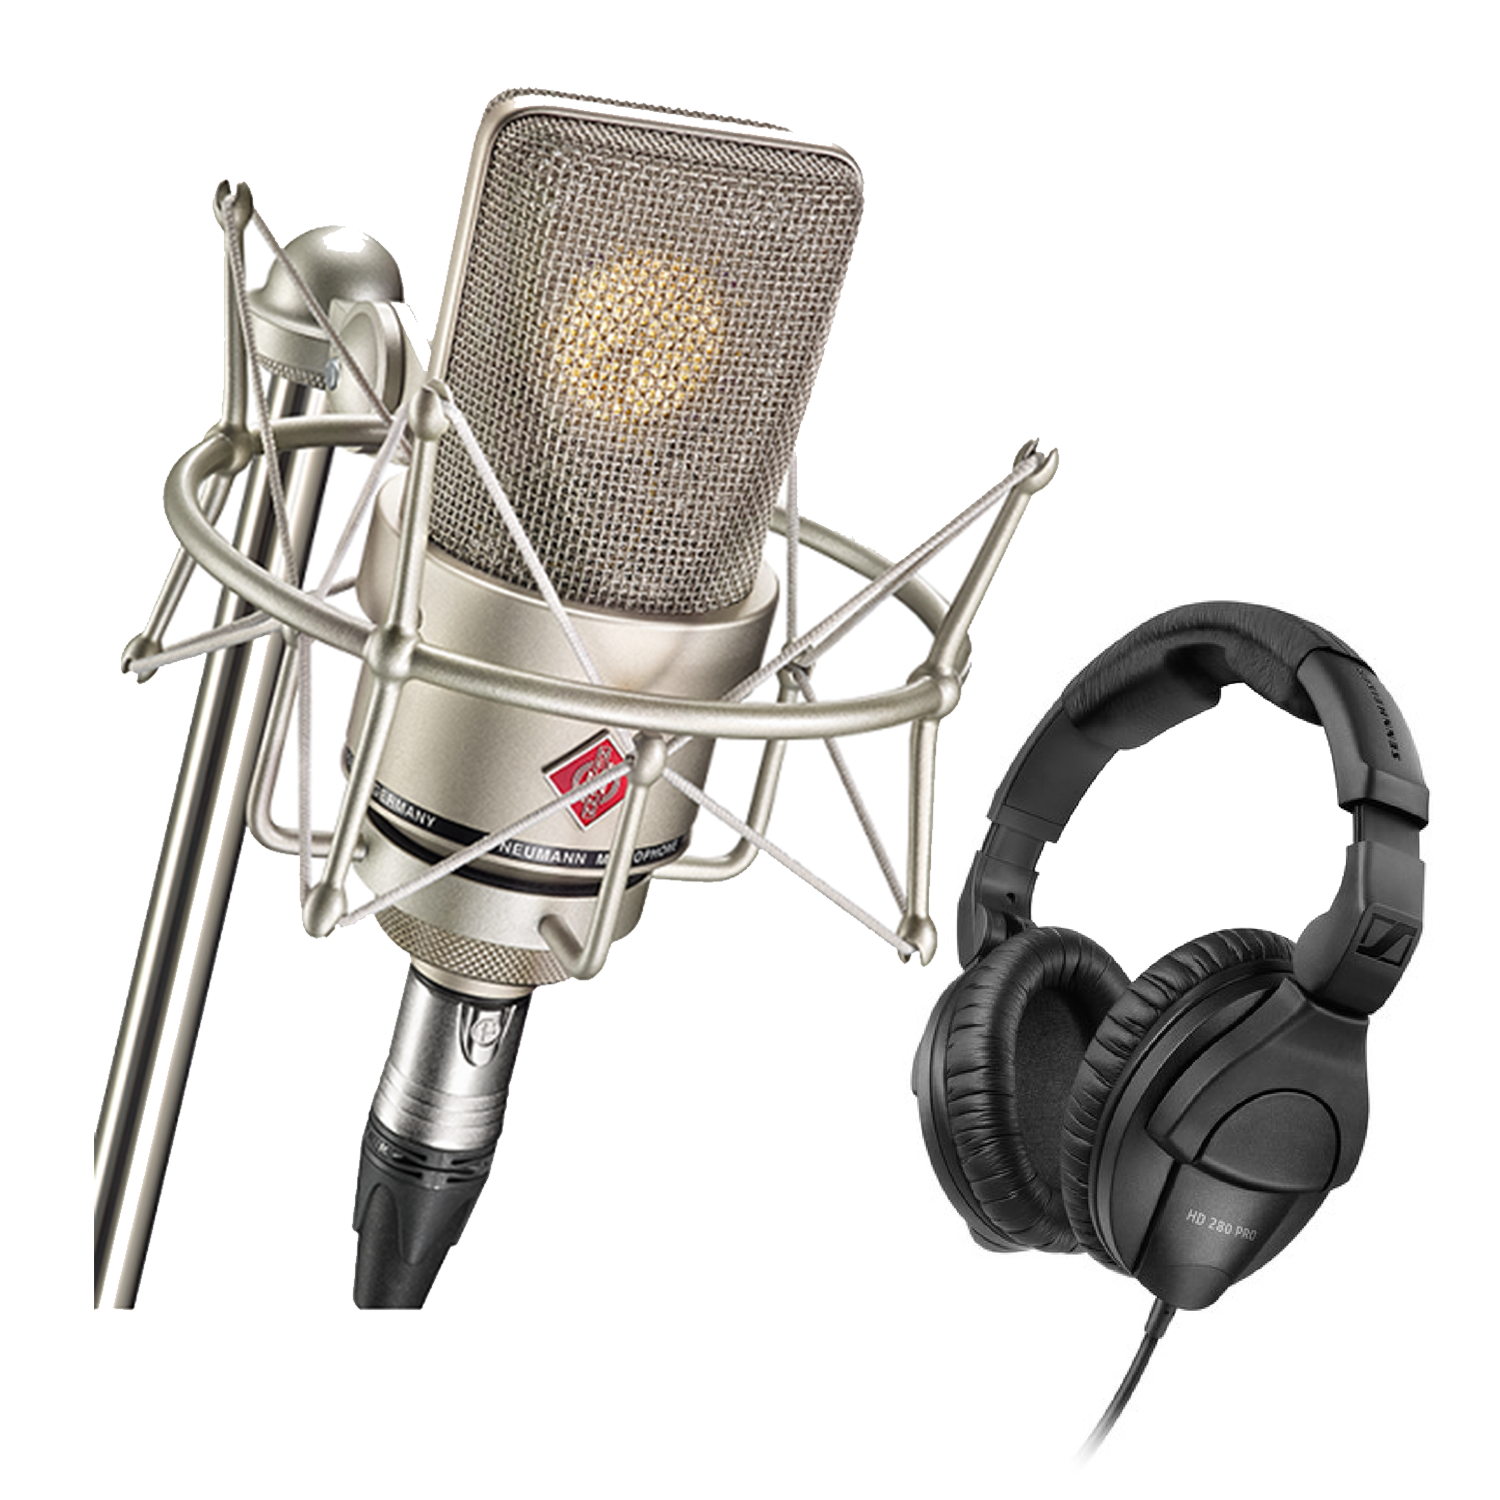 Large-Diaphragm Condenser Microphone (Studio Set, Nickel/Black) with Free Sennheiser HD280 Pro   TLM 103 Studio Set with free Sennheiser HD280 Pro neumann